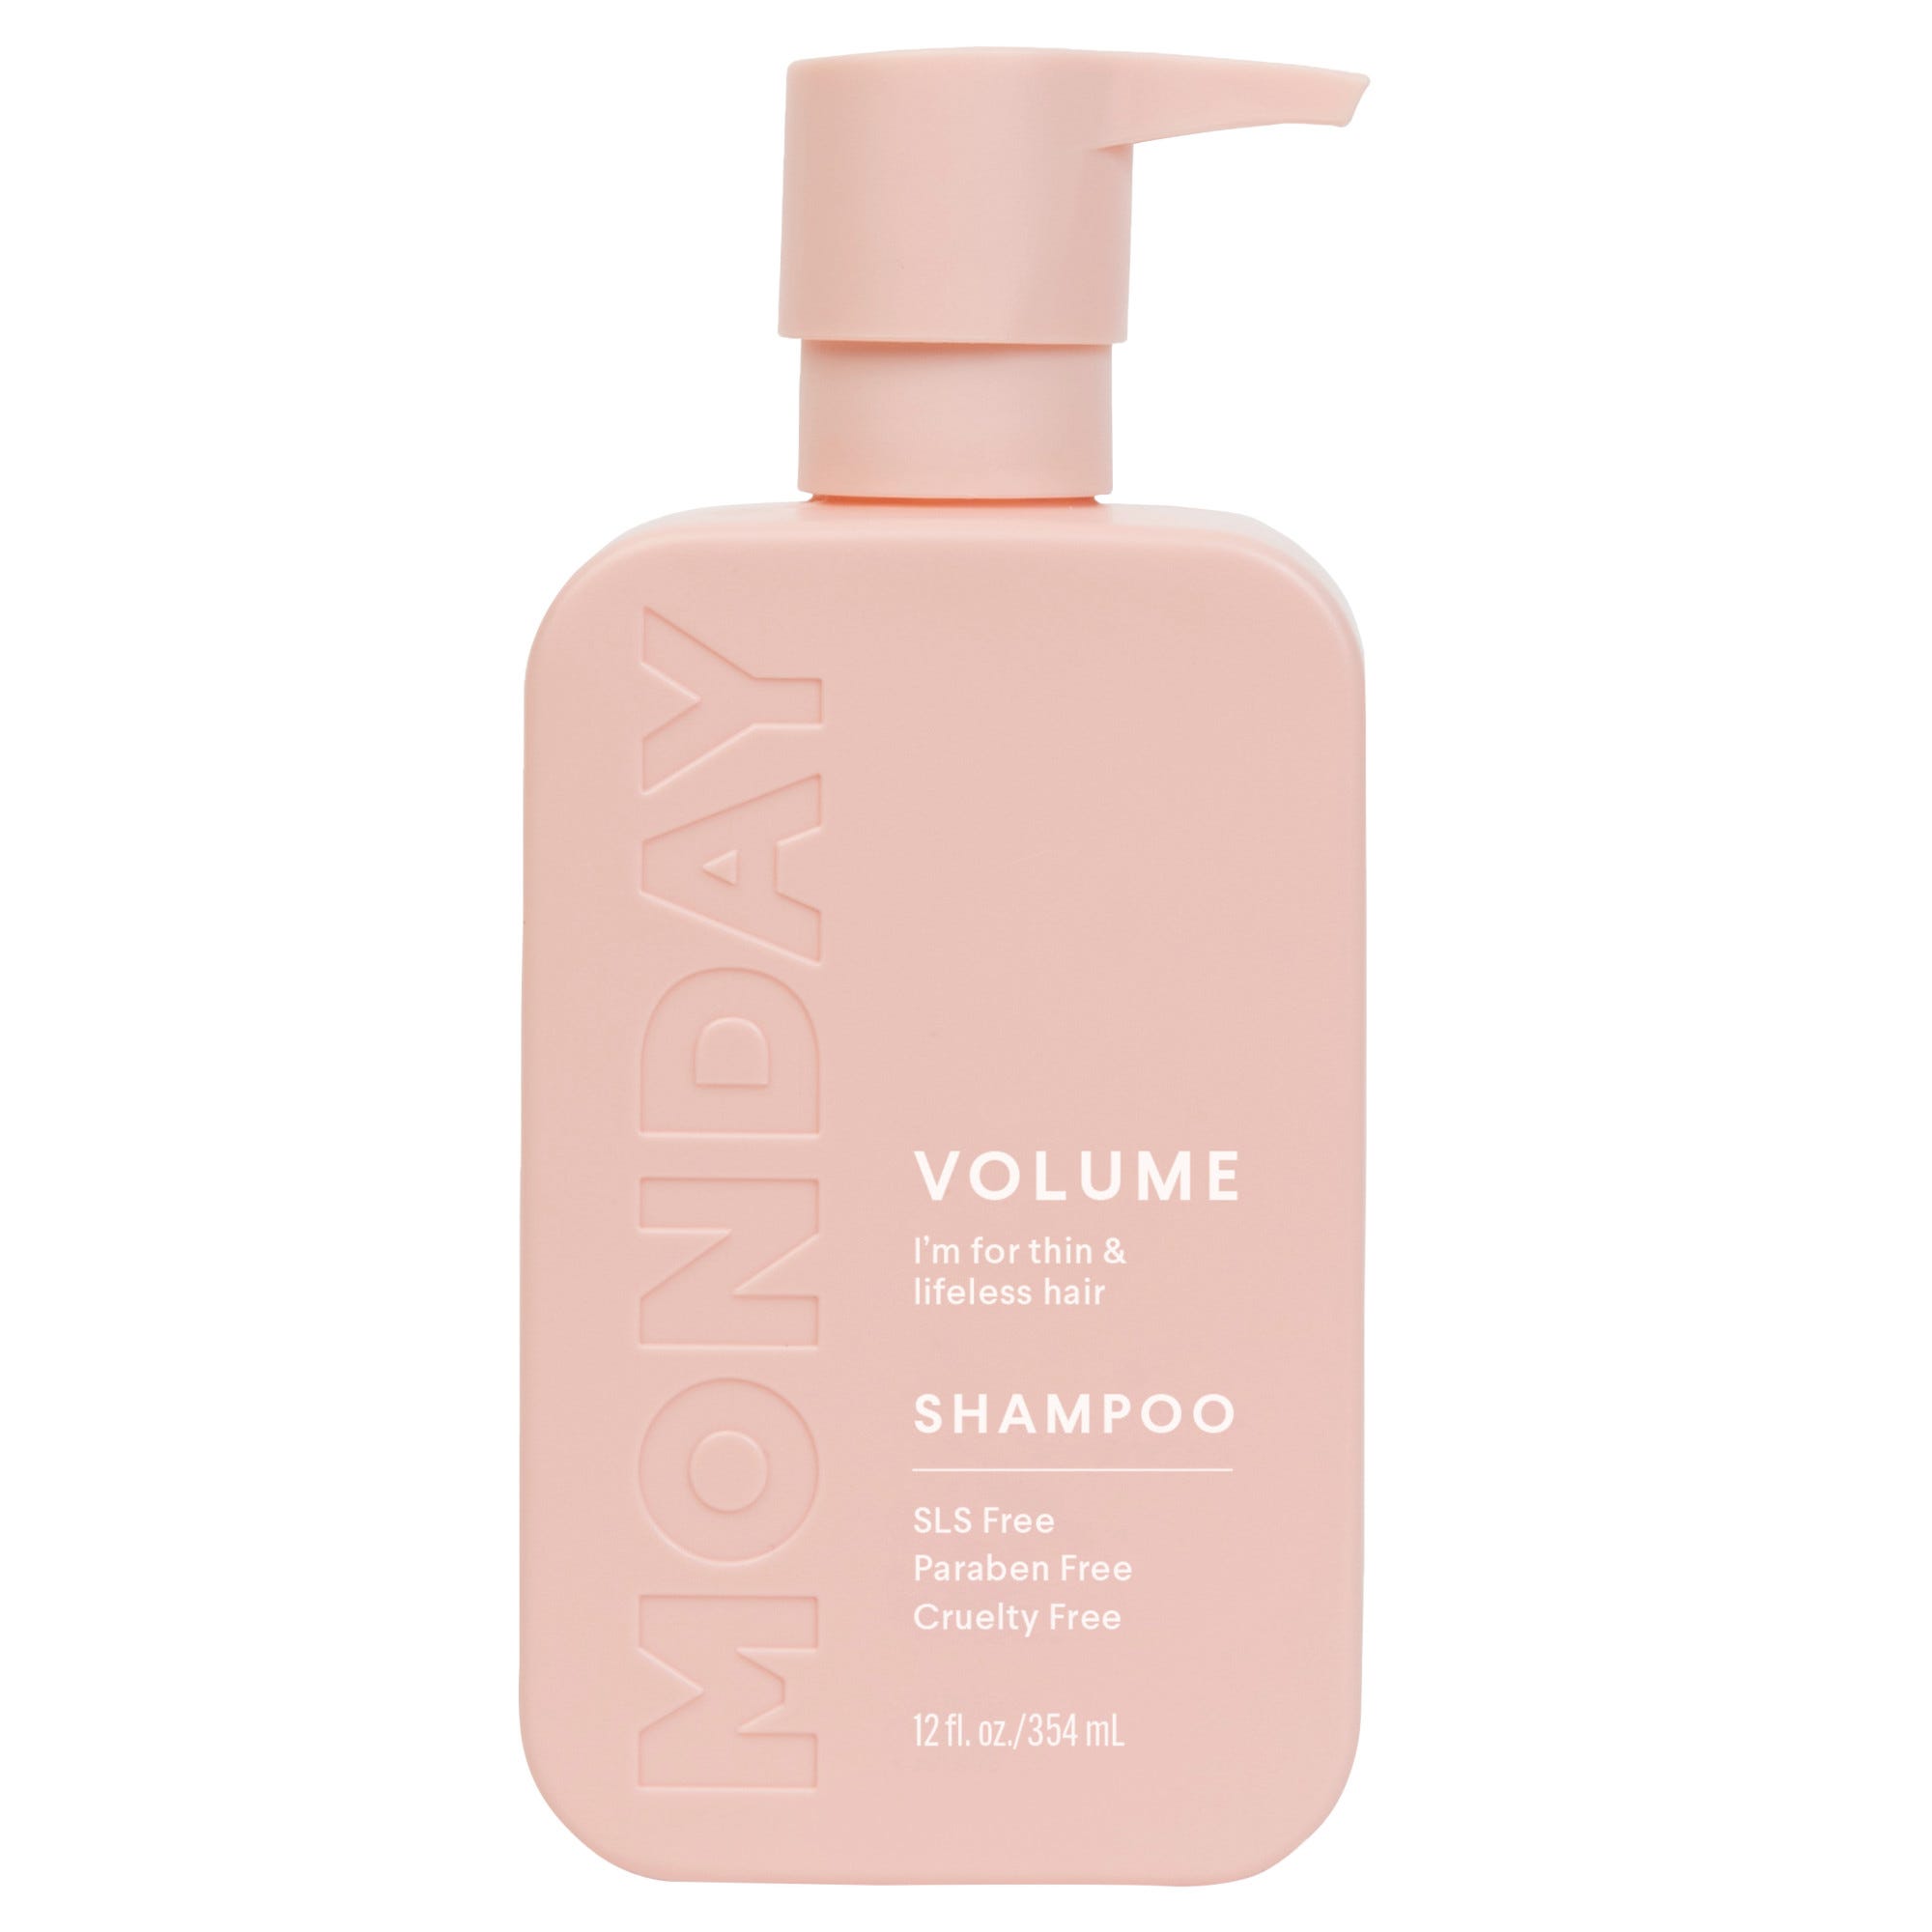 Monday Haircare Volume Shampoo - 12 fl oz